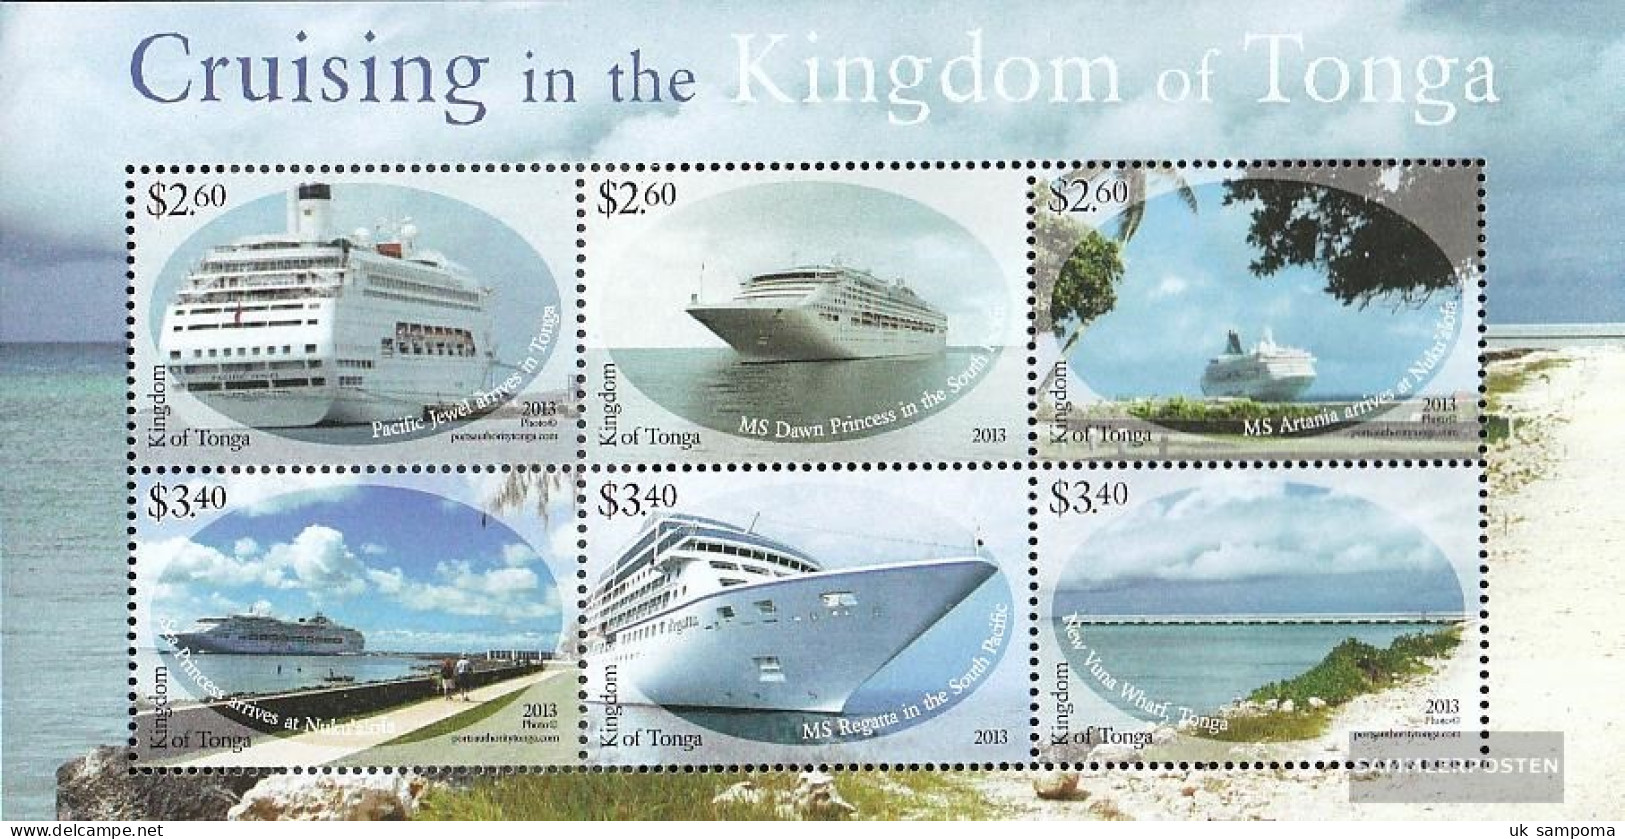 Tonga Block74 (complete Issue) Unmounted Mint / Never Hinged 2013 Kreuzfahrtschiffe - Tonga (1970-...)